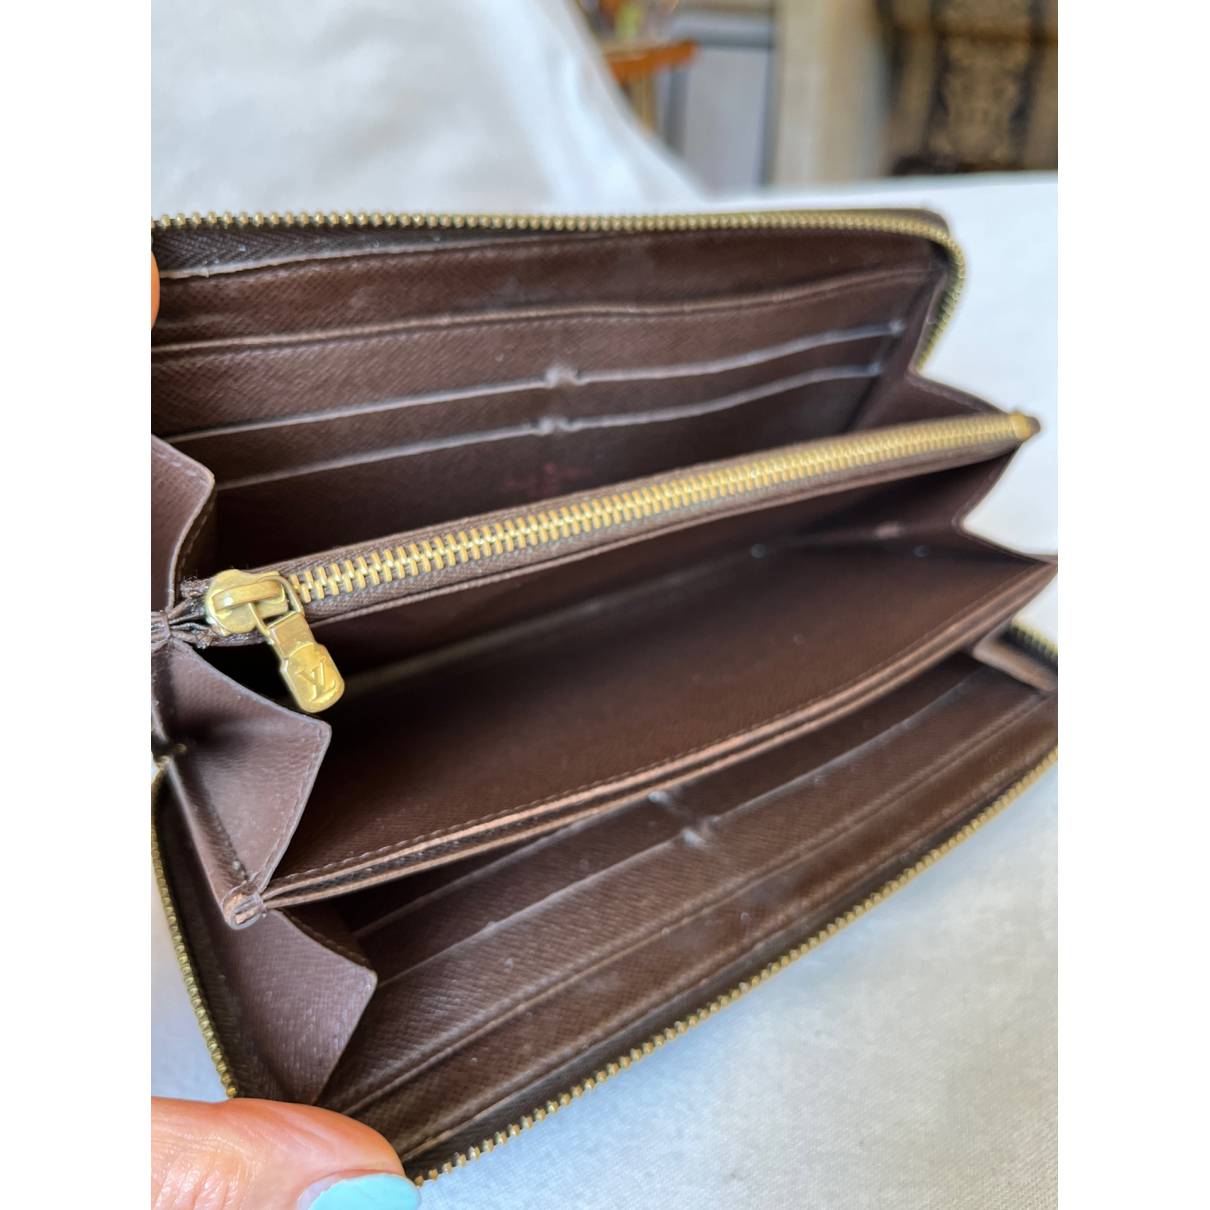 inside of a louis vuitton wallet